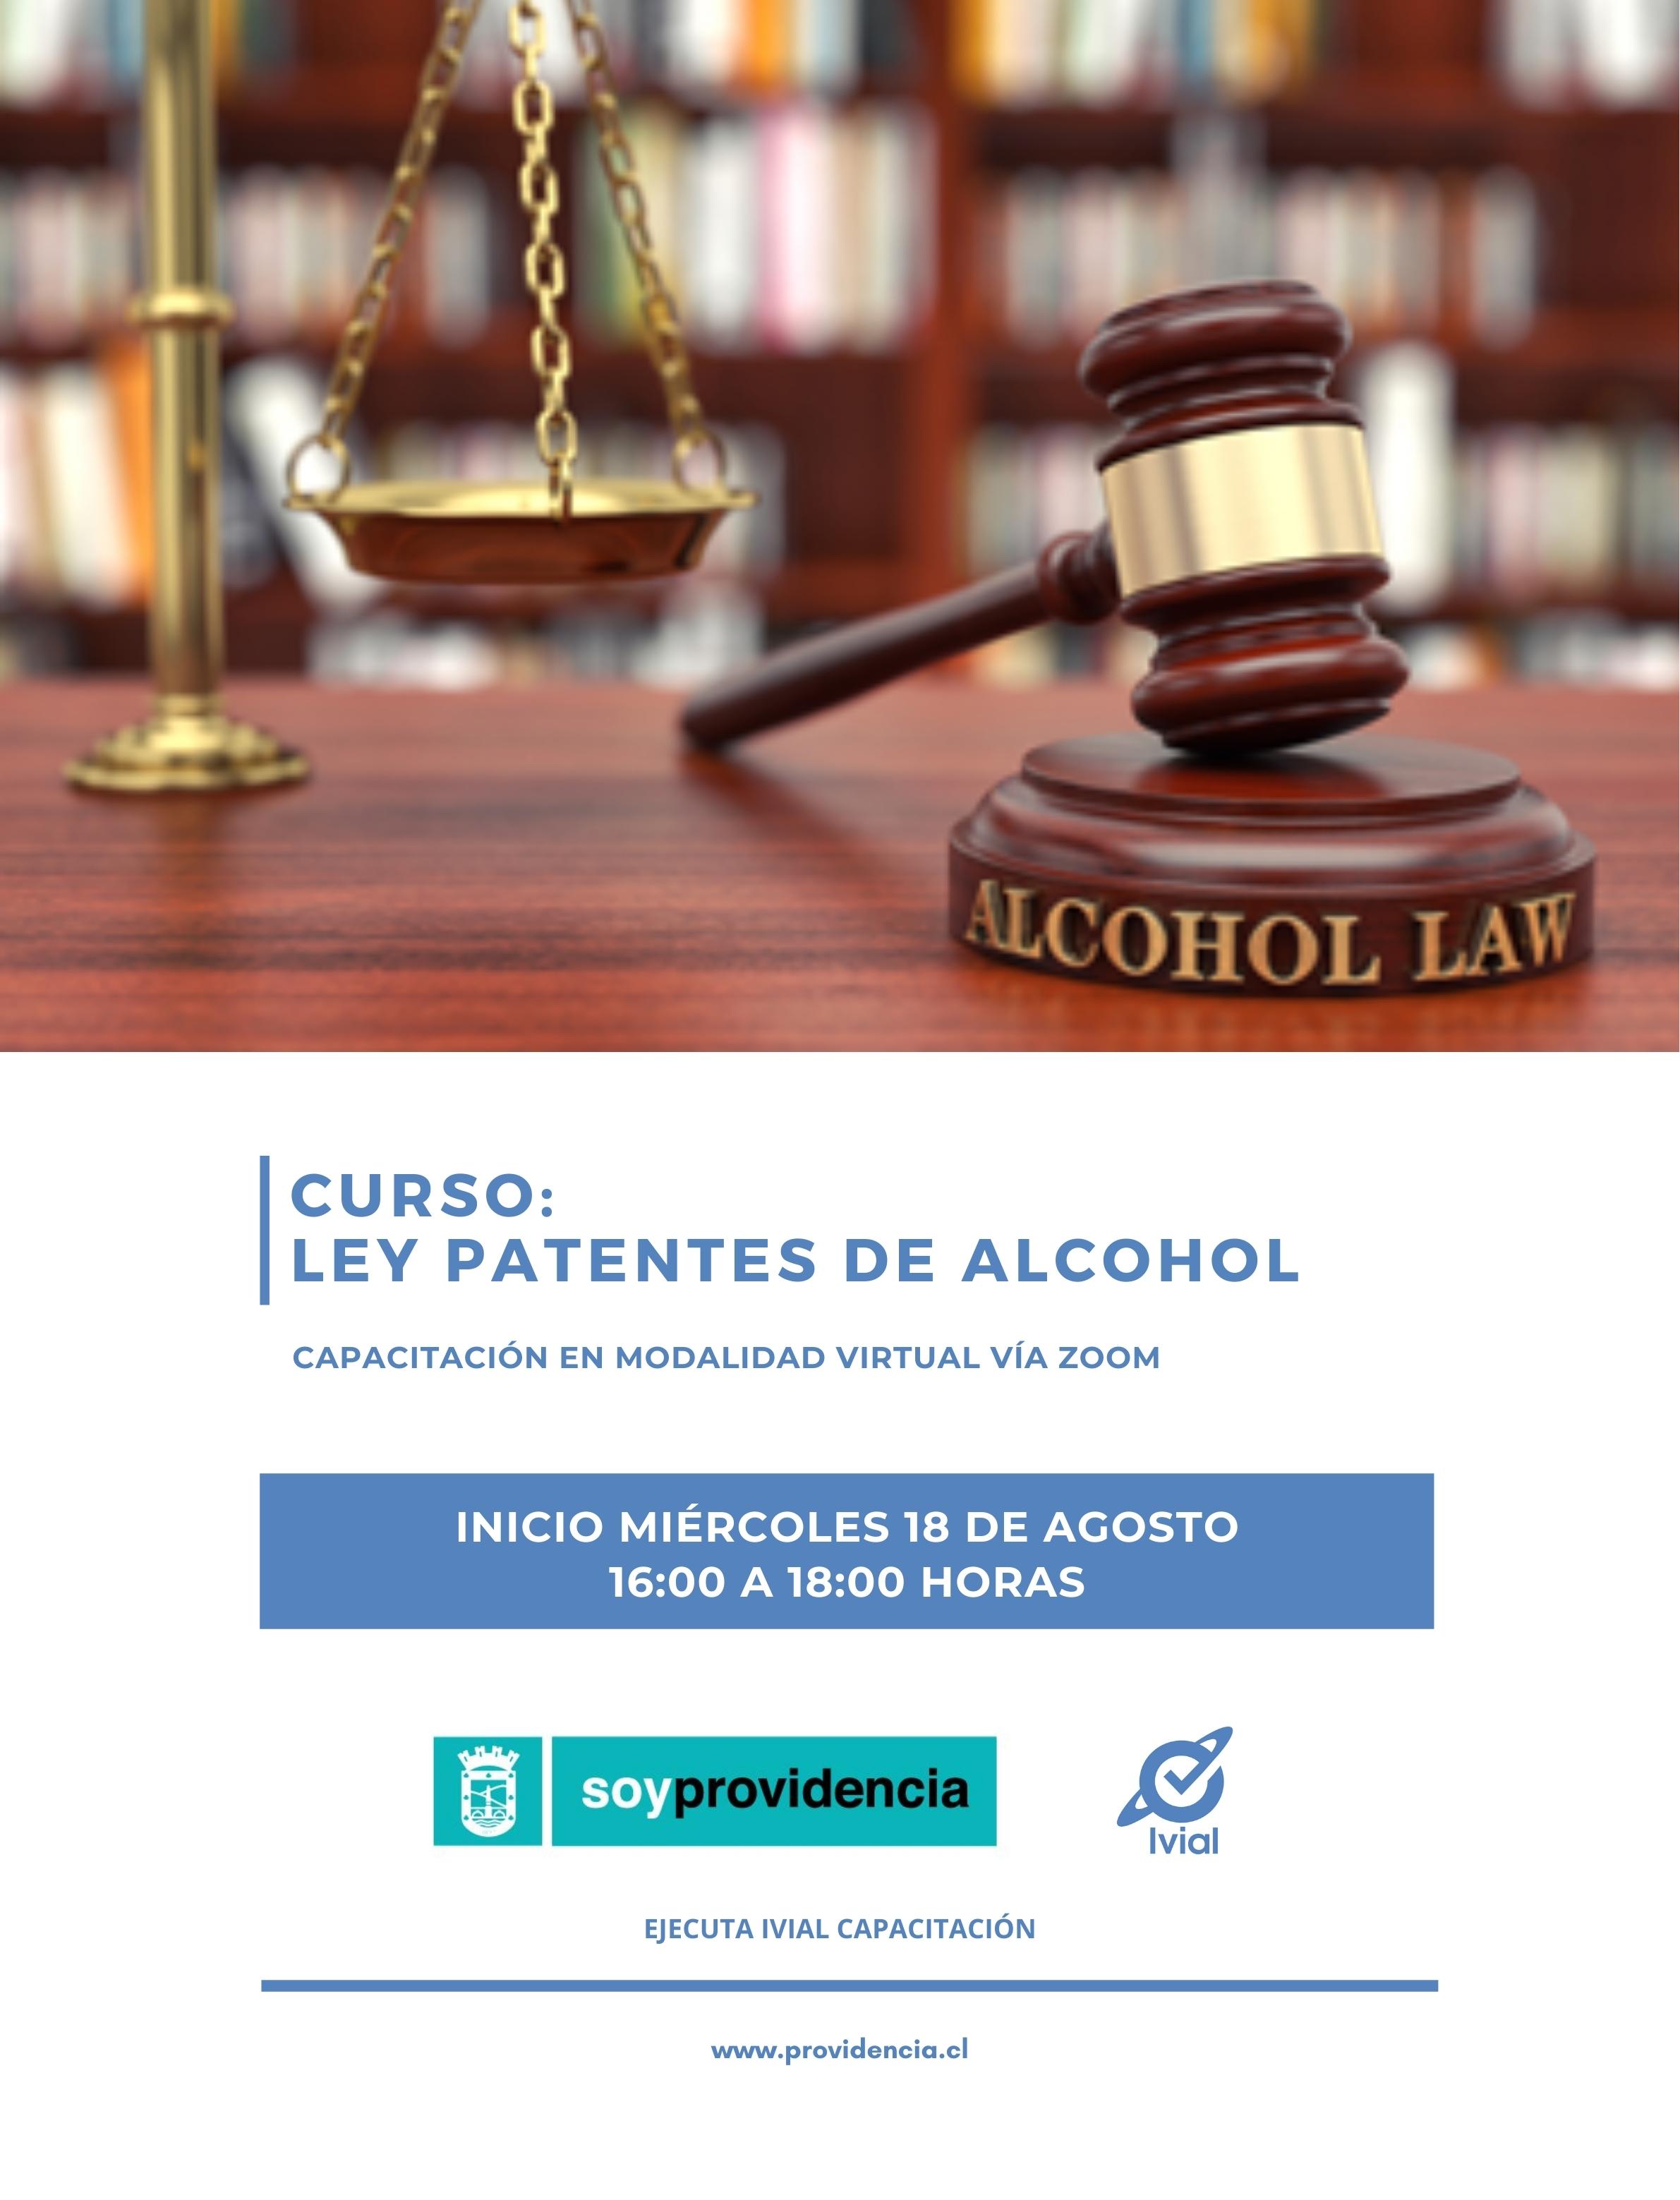 I. MUNICIPALIDAD DE PROVIDENCIA: Ley Patentes de Alcohol